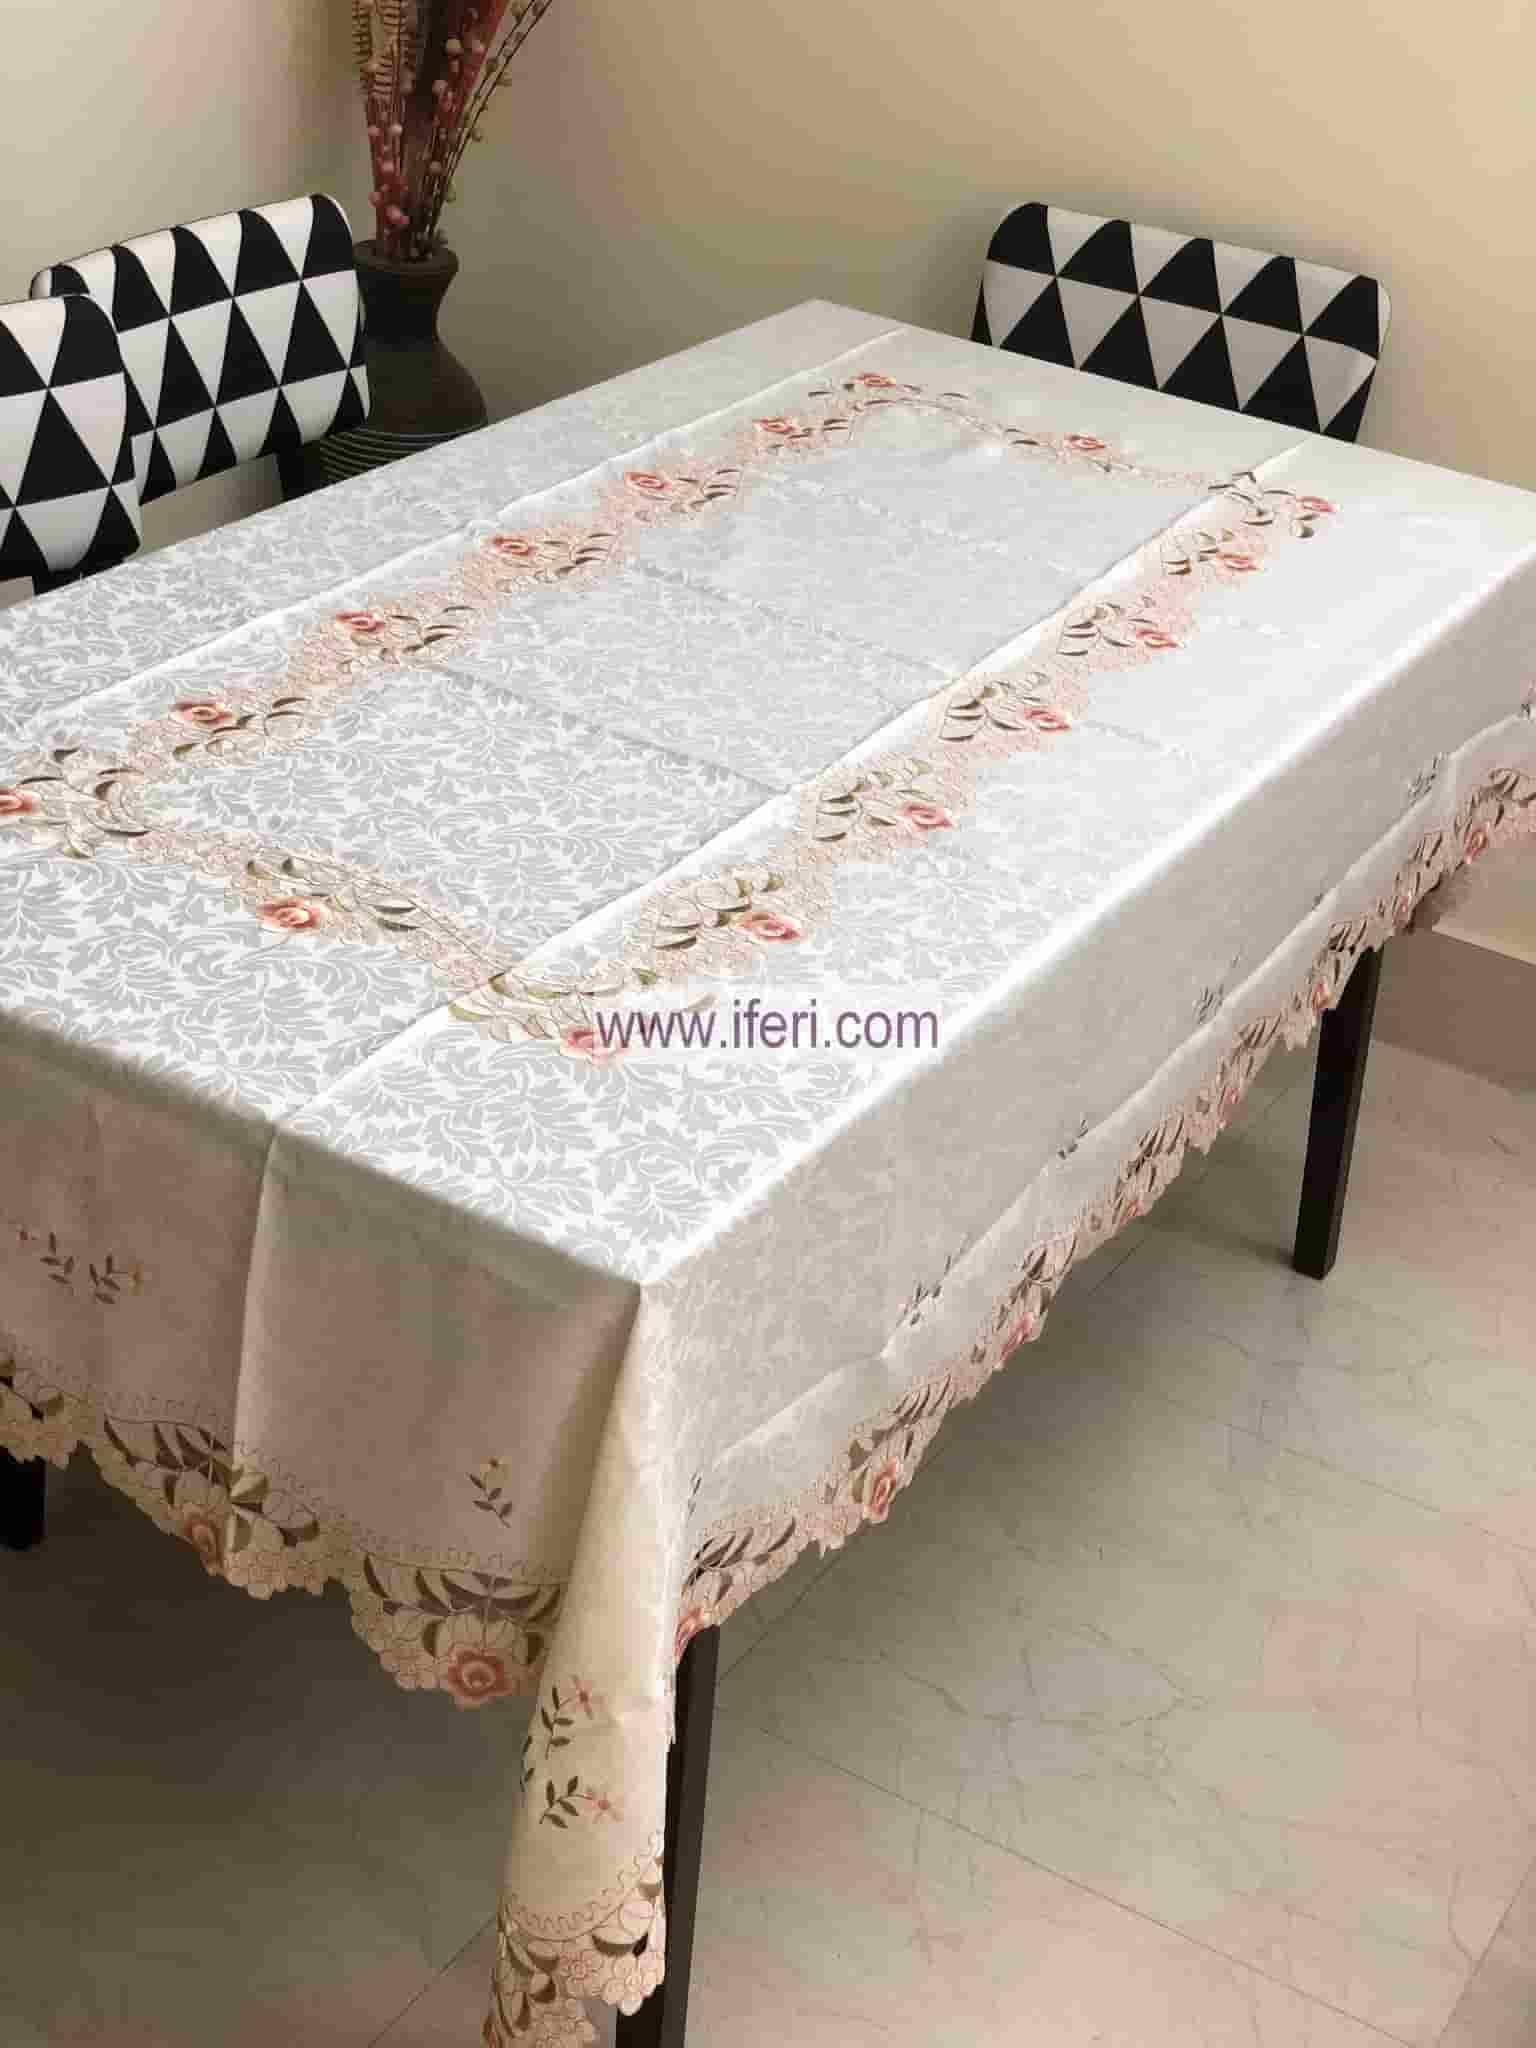 Exclusive Table Cloth RJ42119 Price in Bangladesh - iferi.com